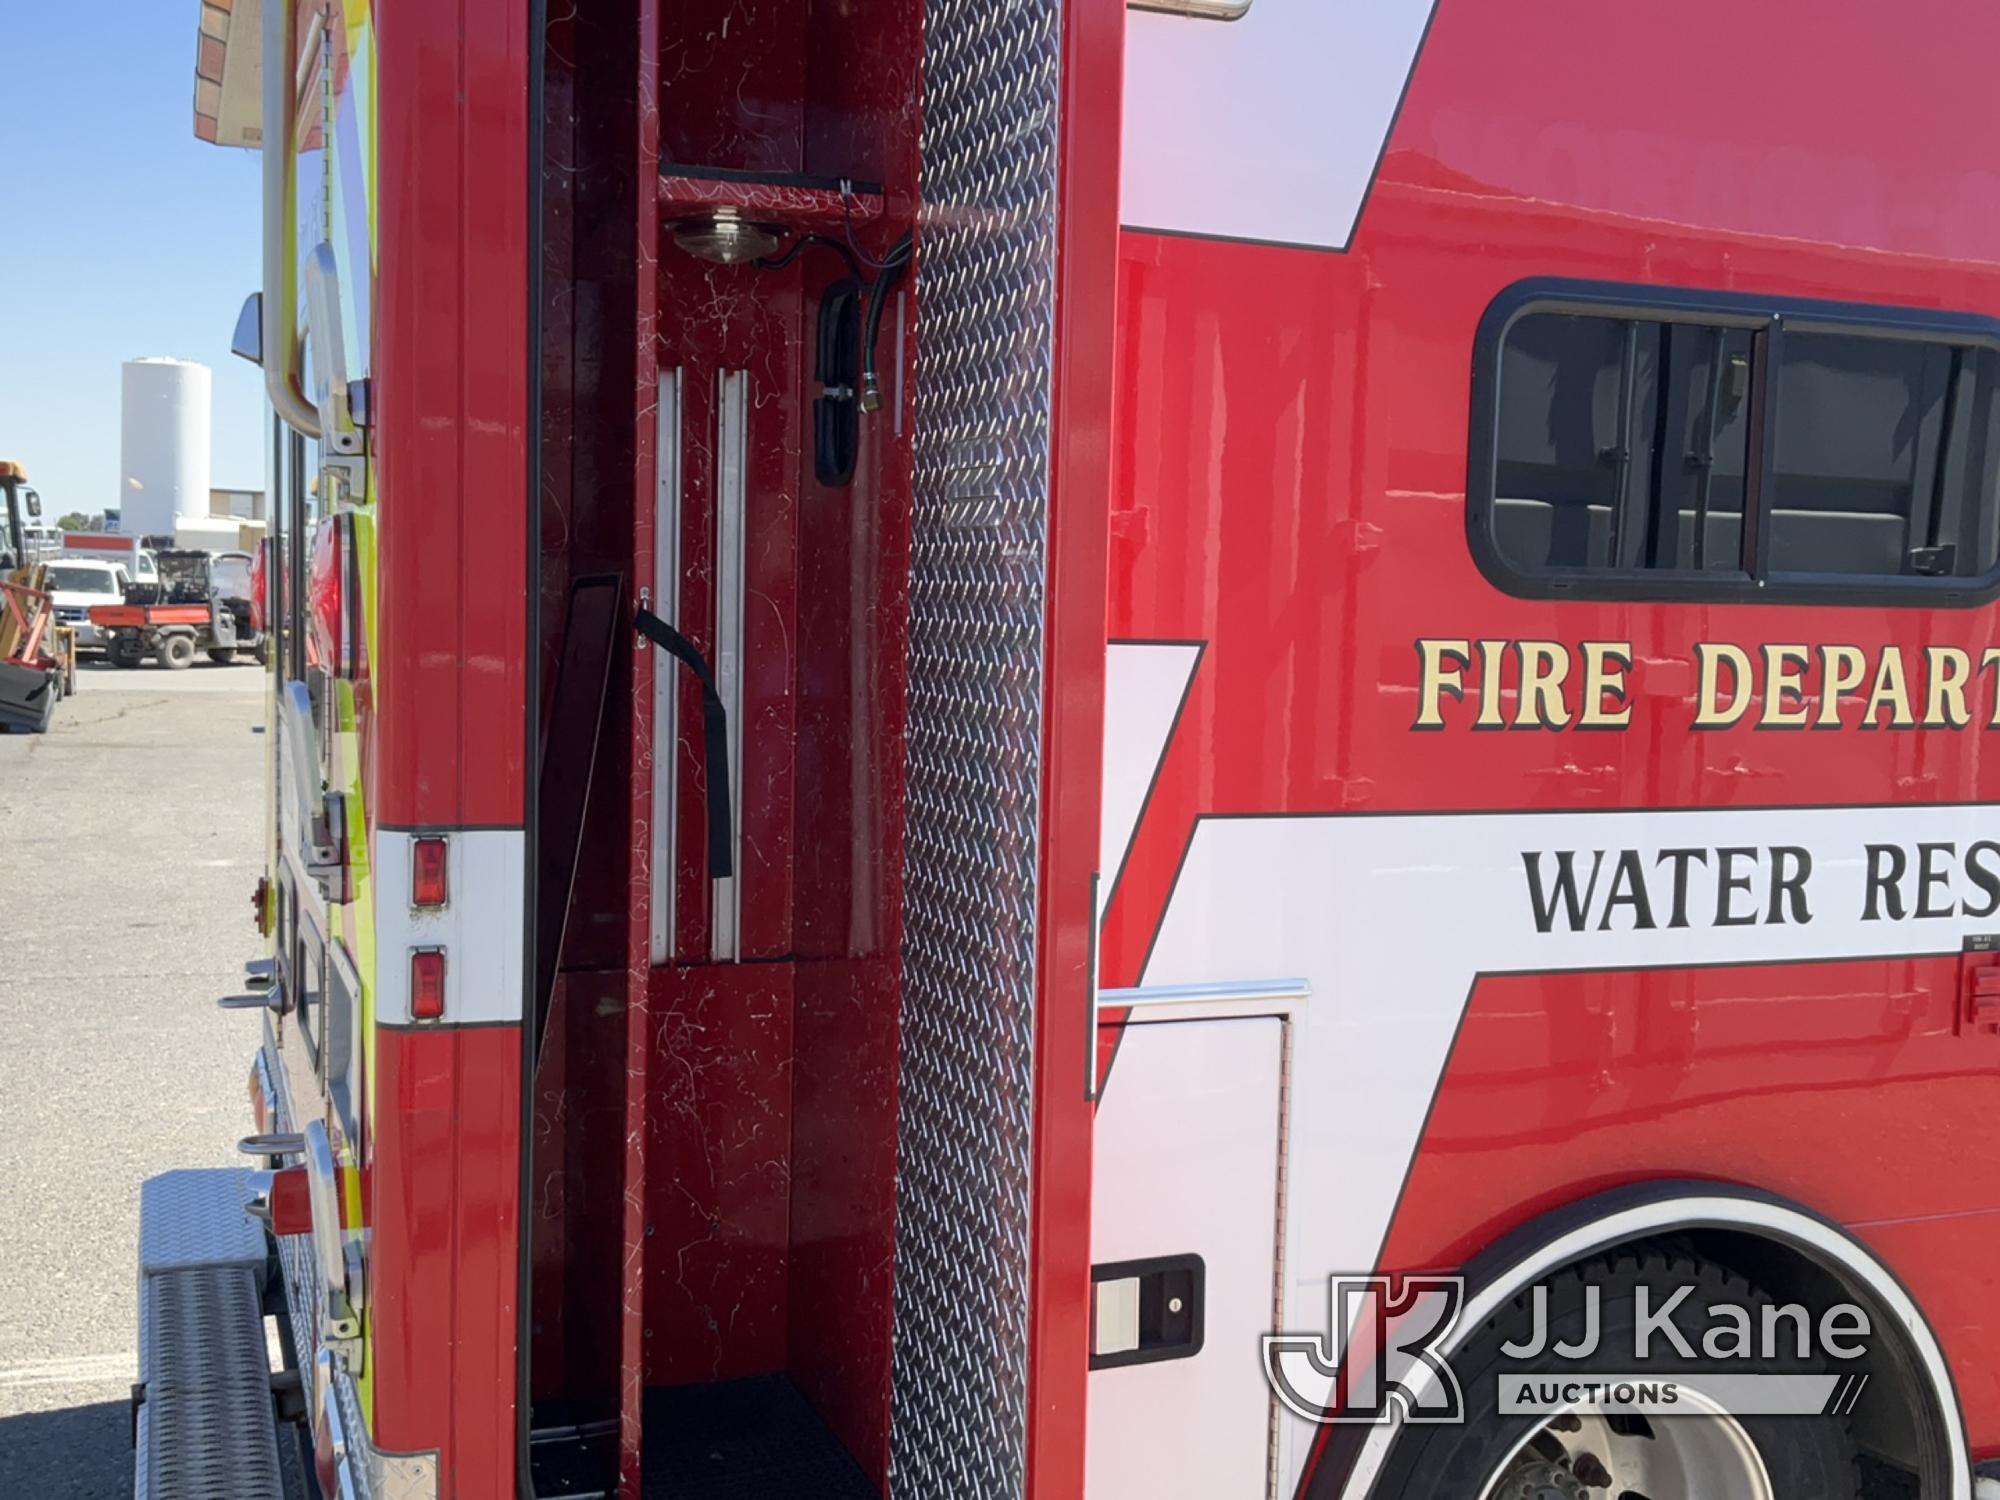 (Dixon, CA) 1999 International 4700 Ambulance/Rescue Vehicle Runs & Moves